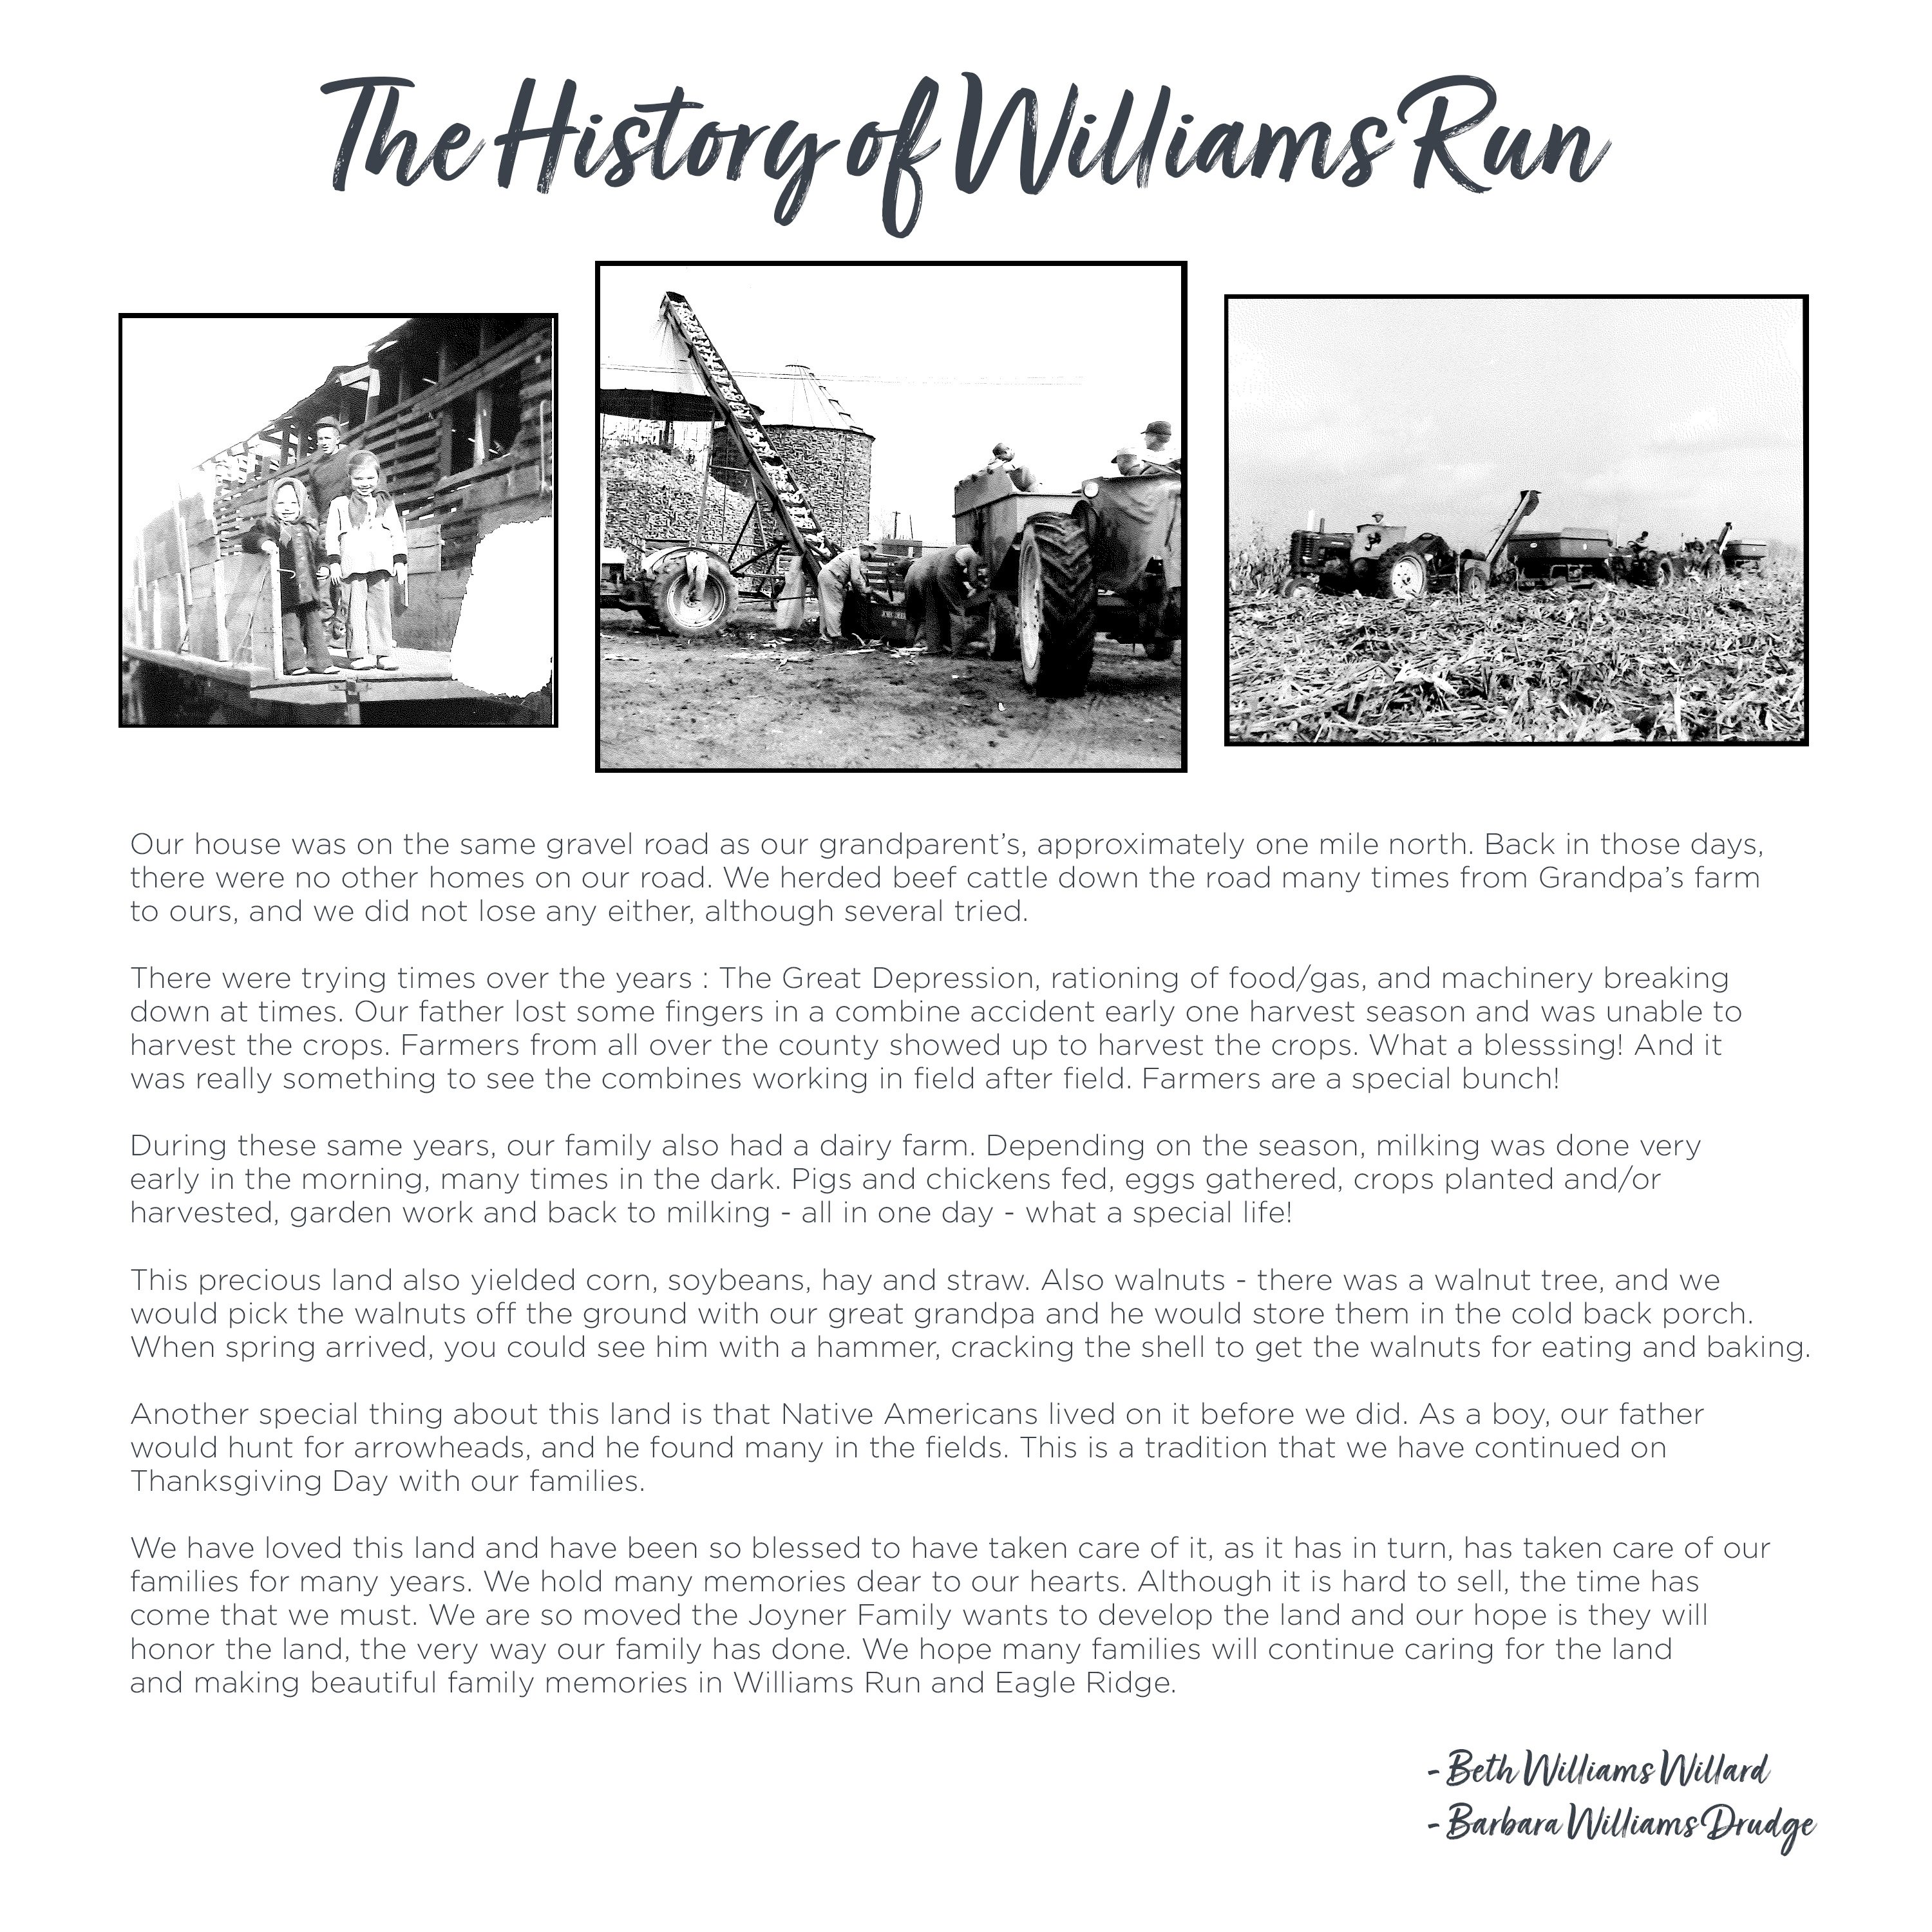 williams run history with pix